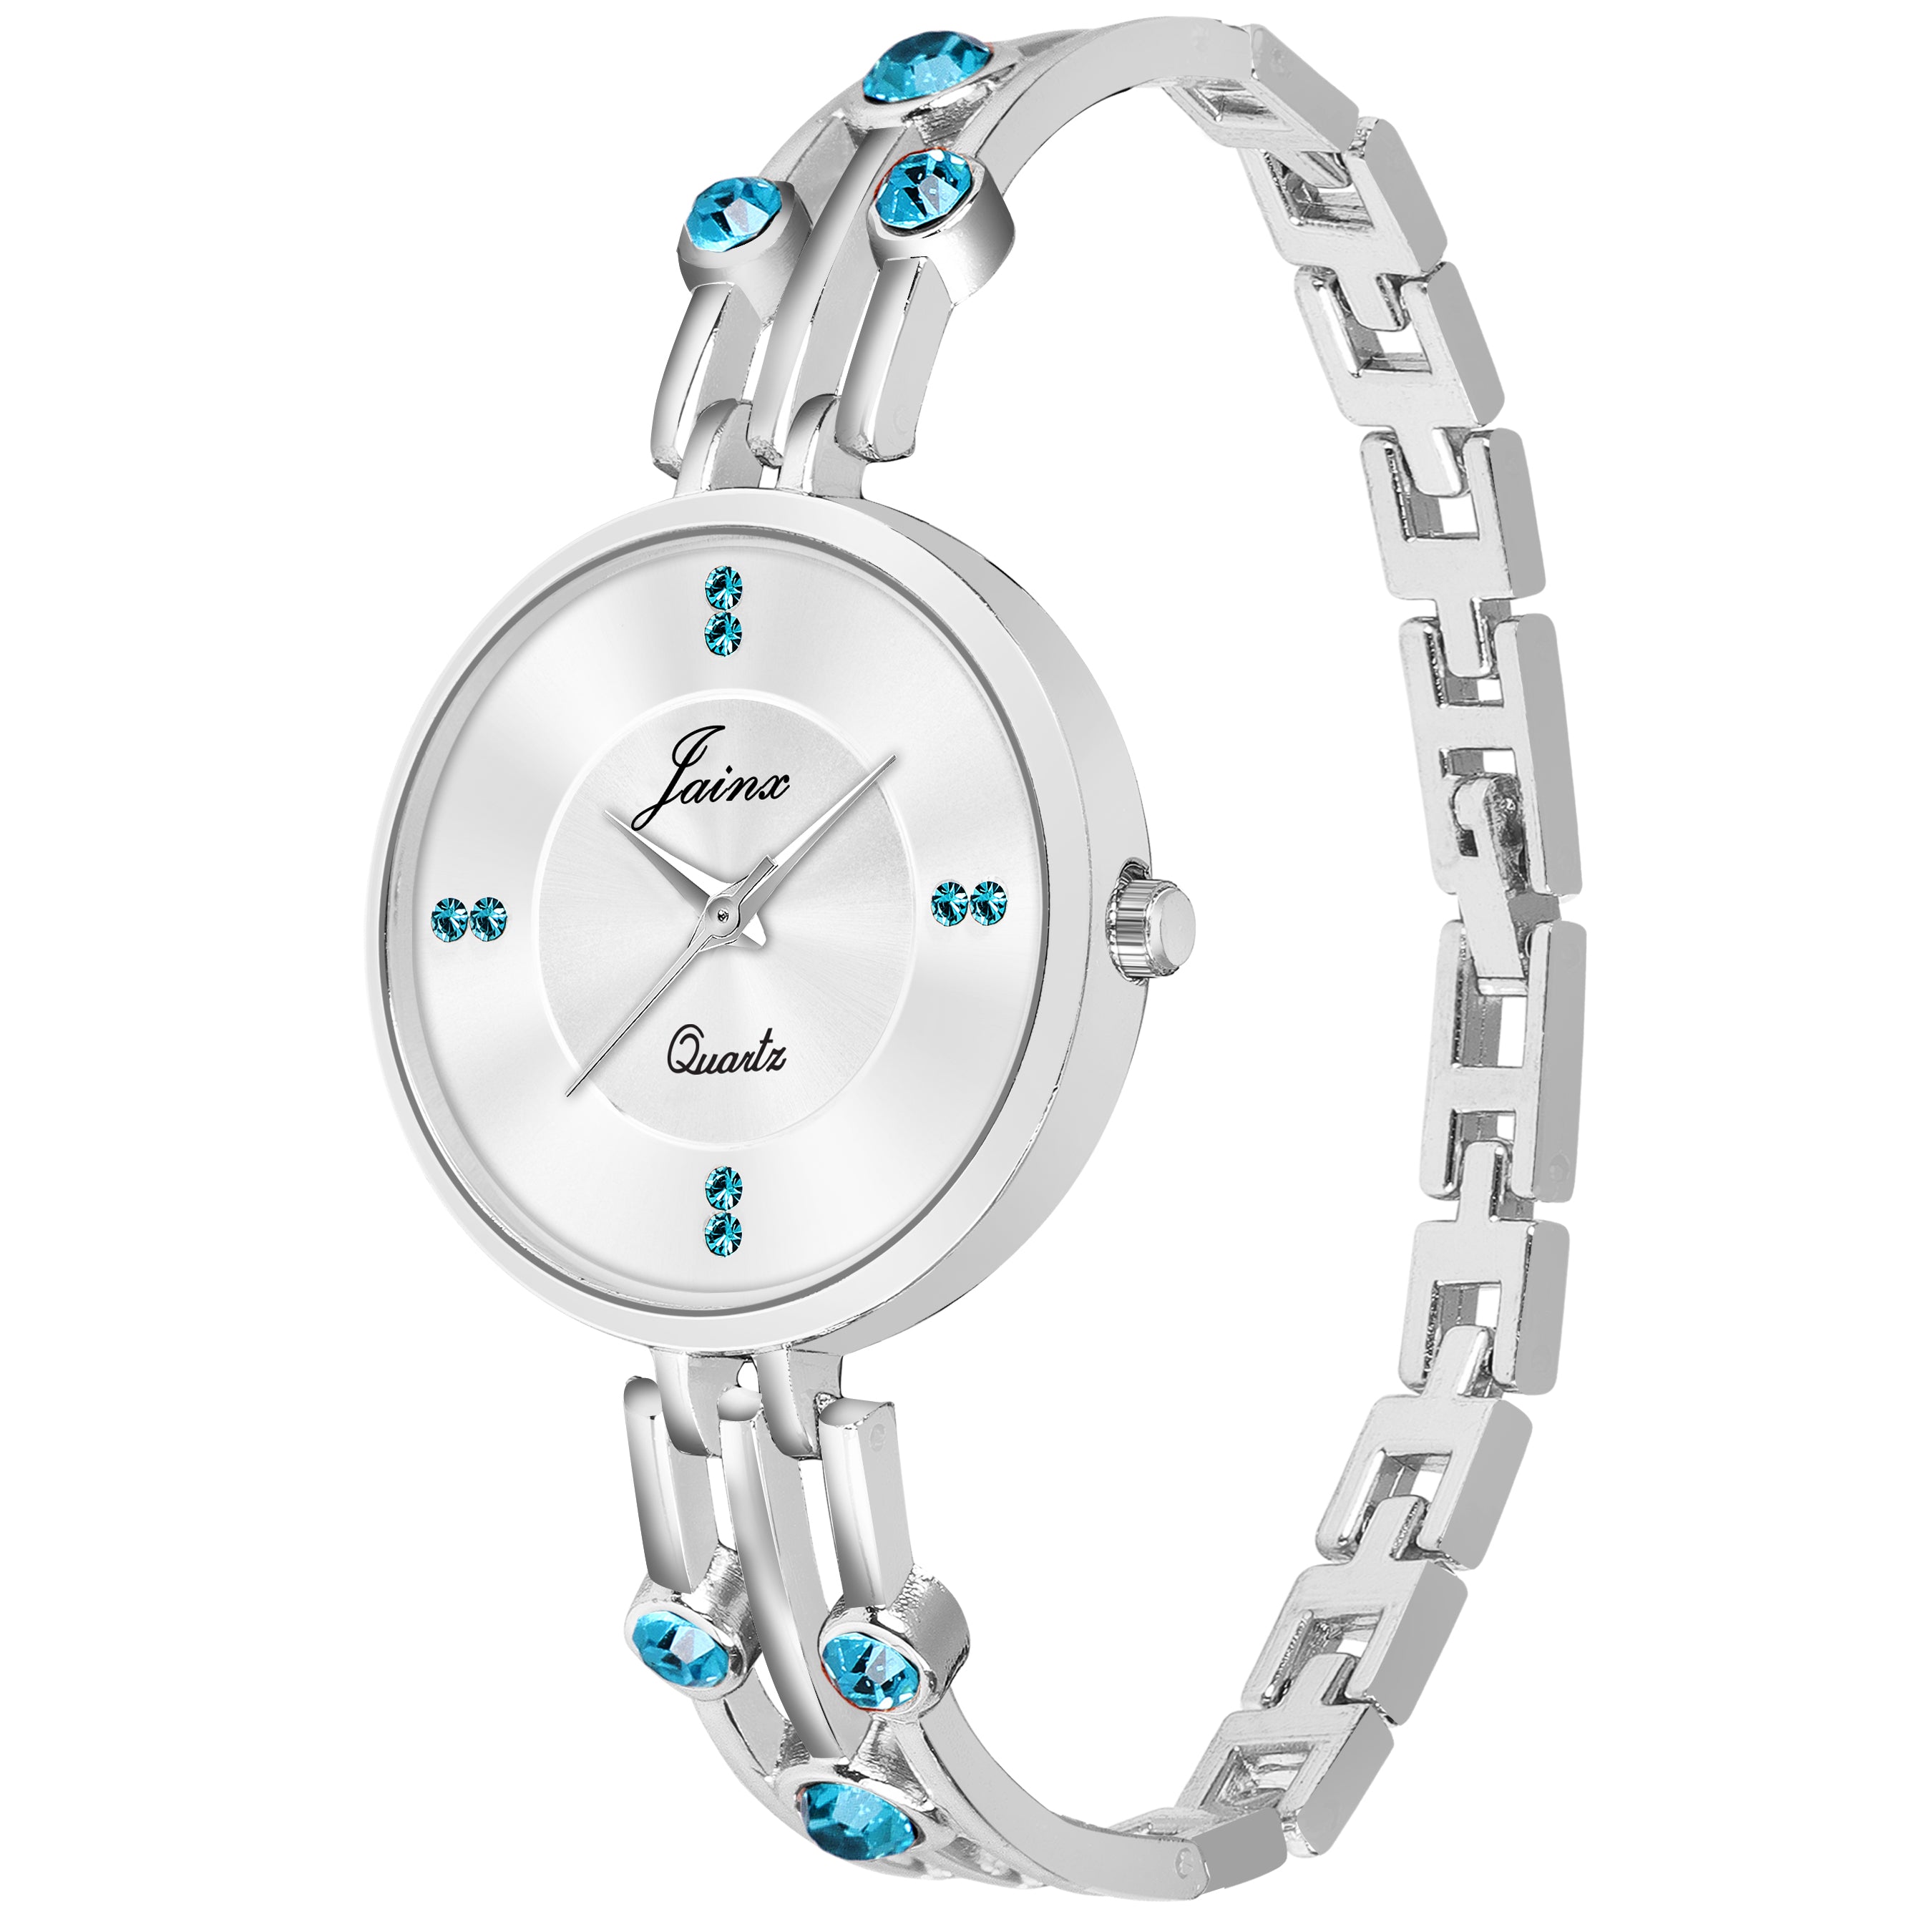 Jainx Silver Bracelet Analog Wrist Watch for Women - JW8544 - Jainx Store